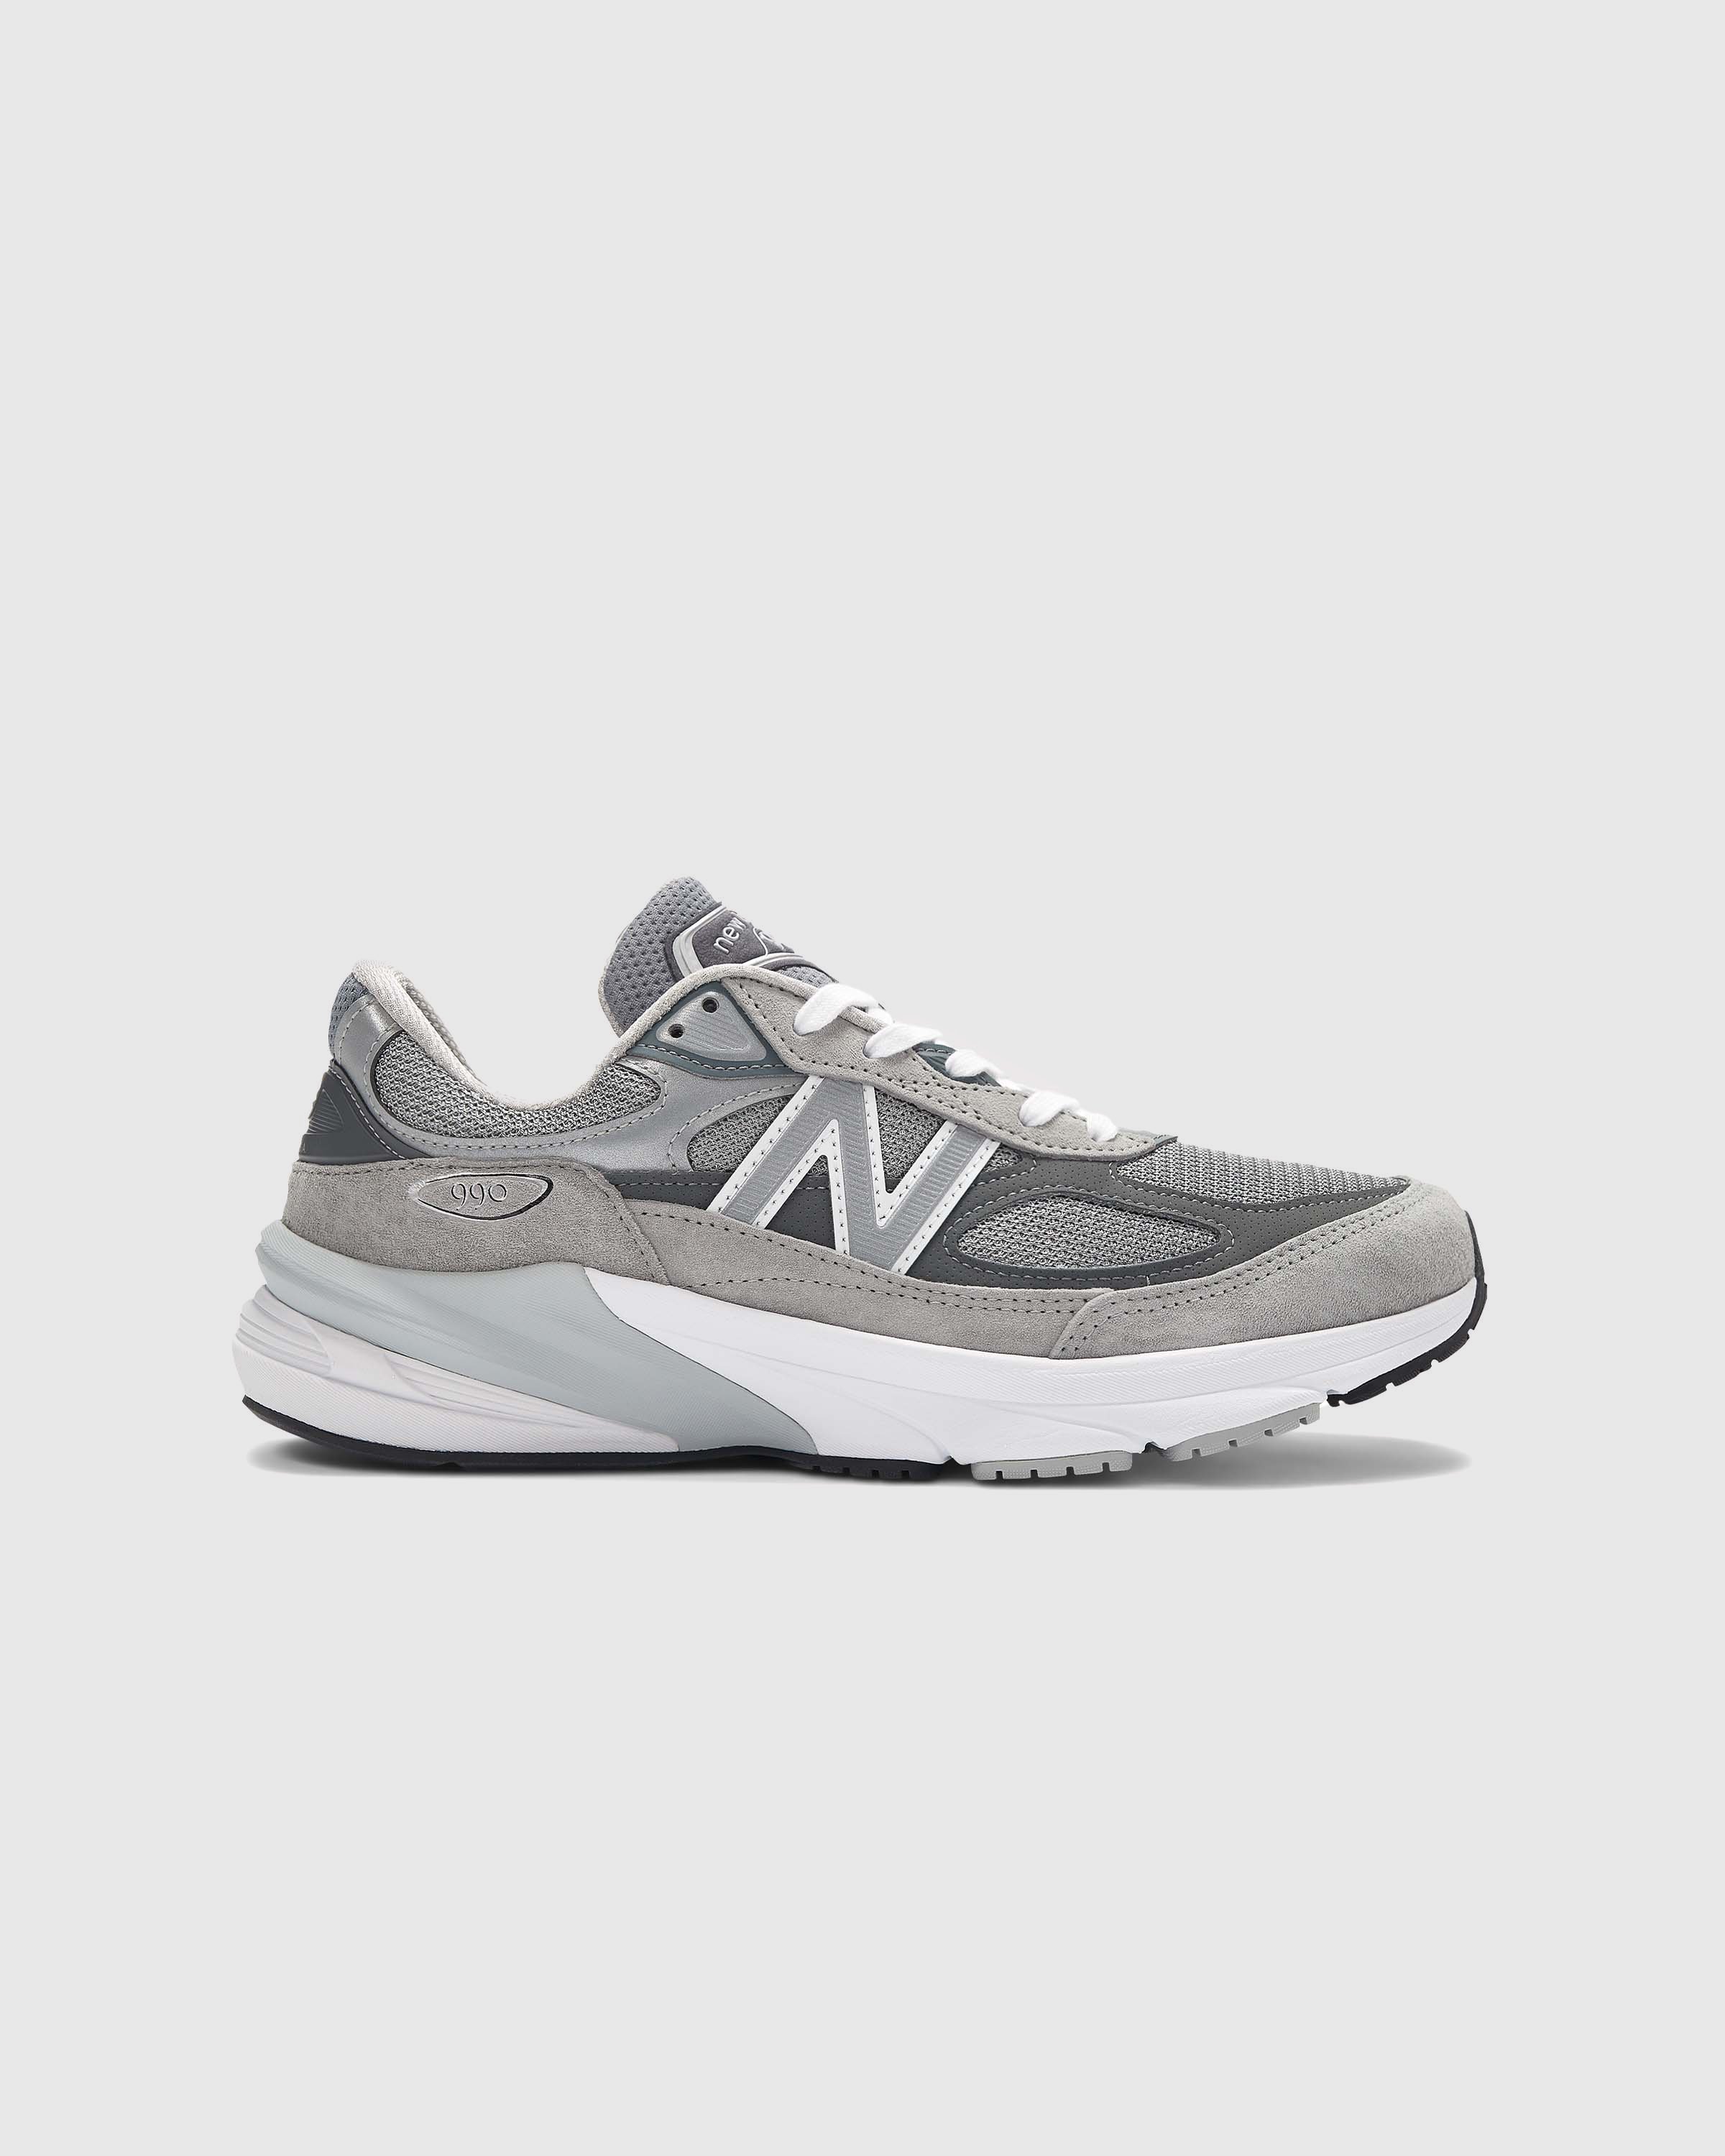 New Balance - M 990v6 Cool Gray - Footwear - Grey - Image 1